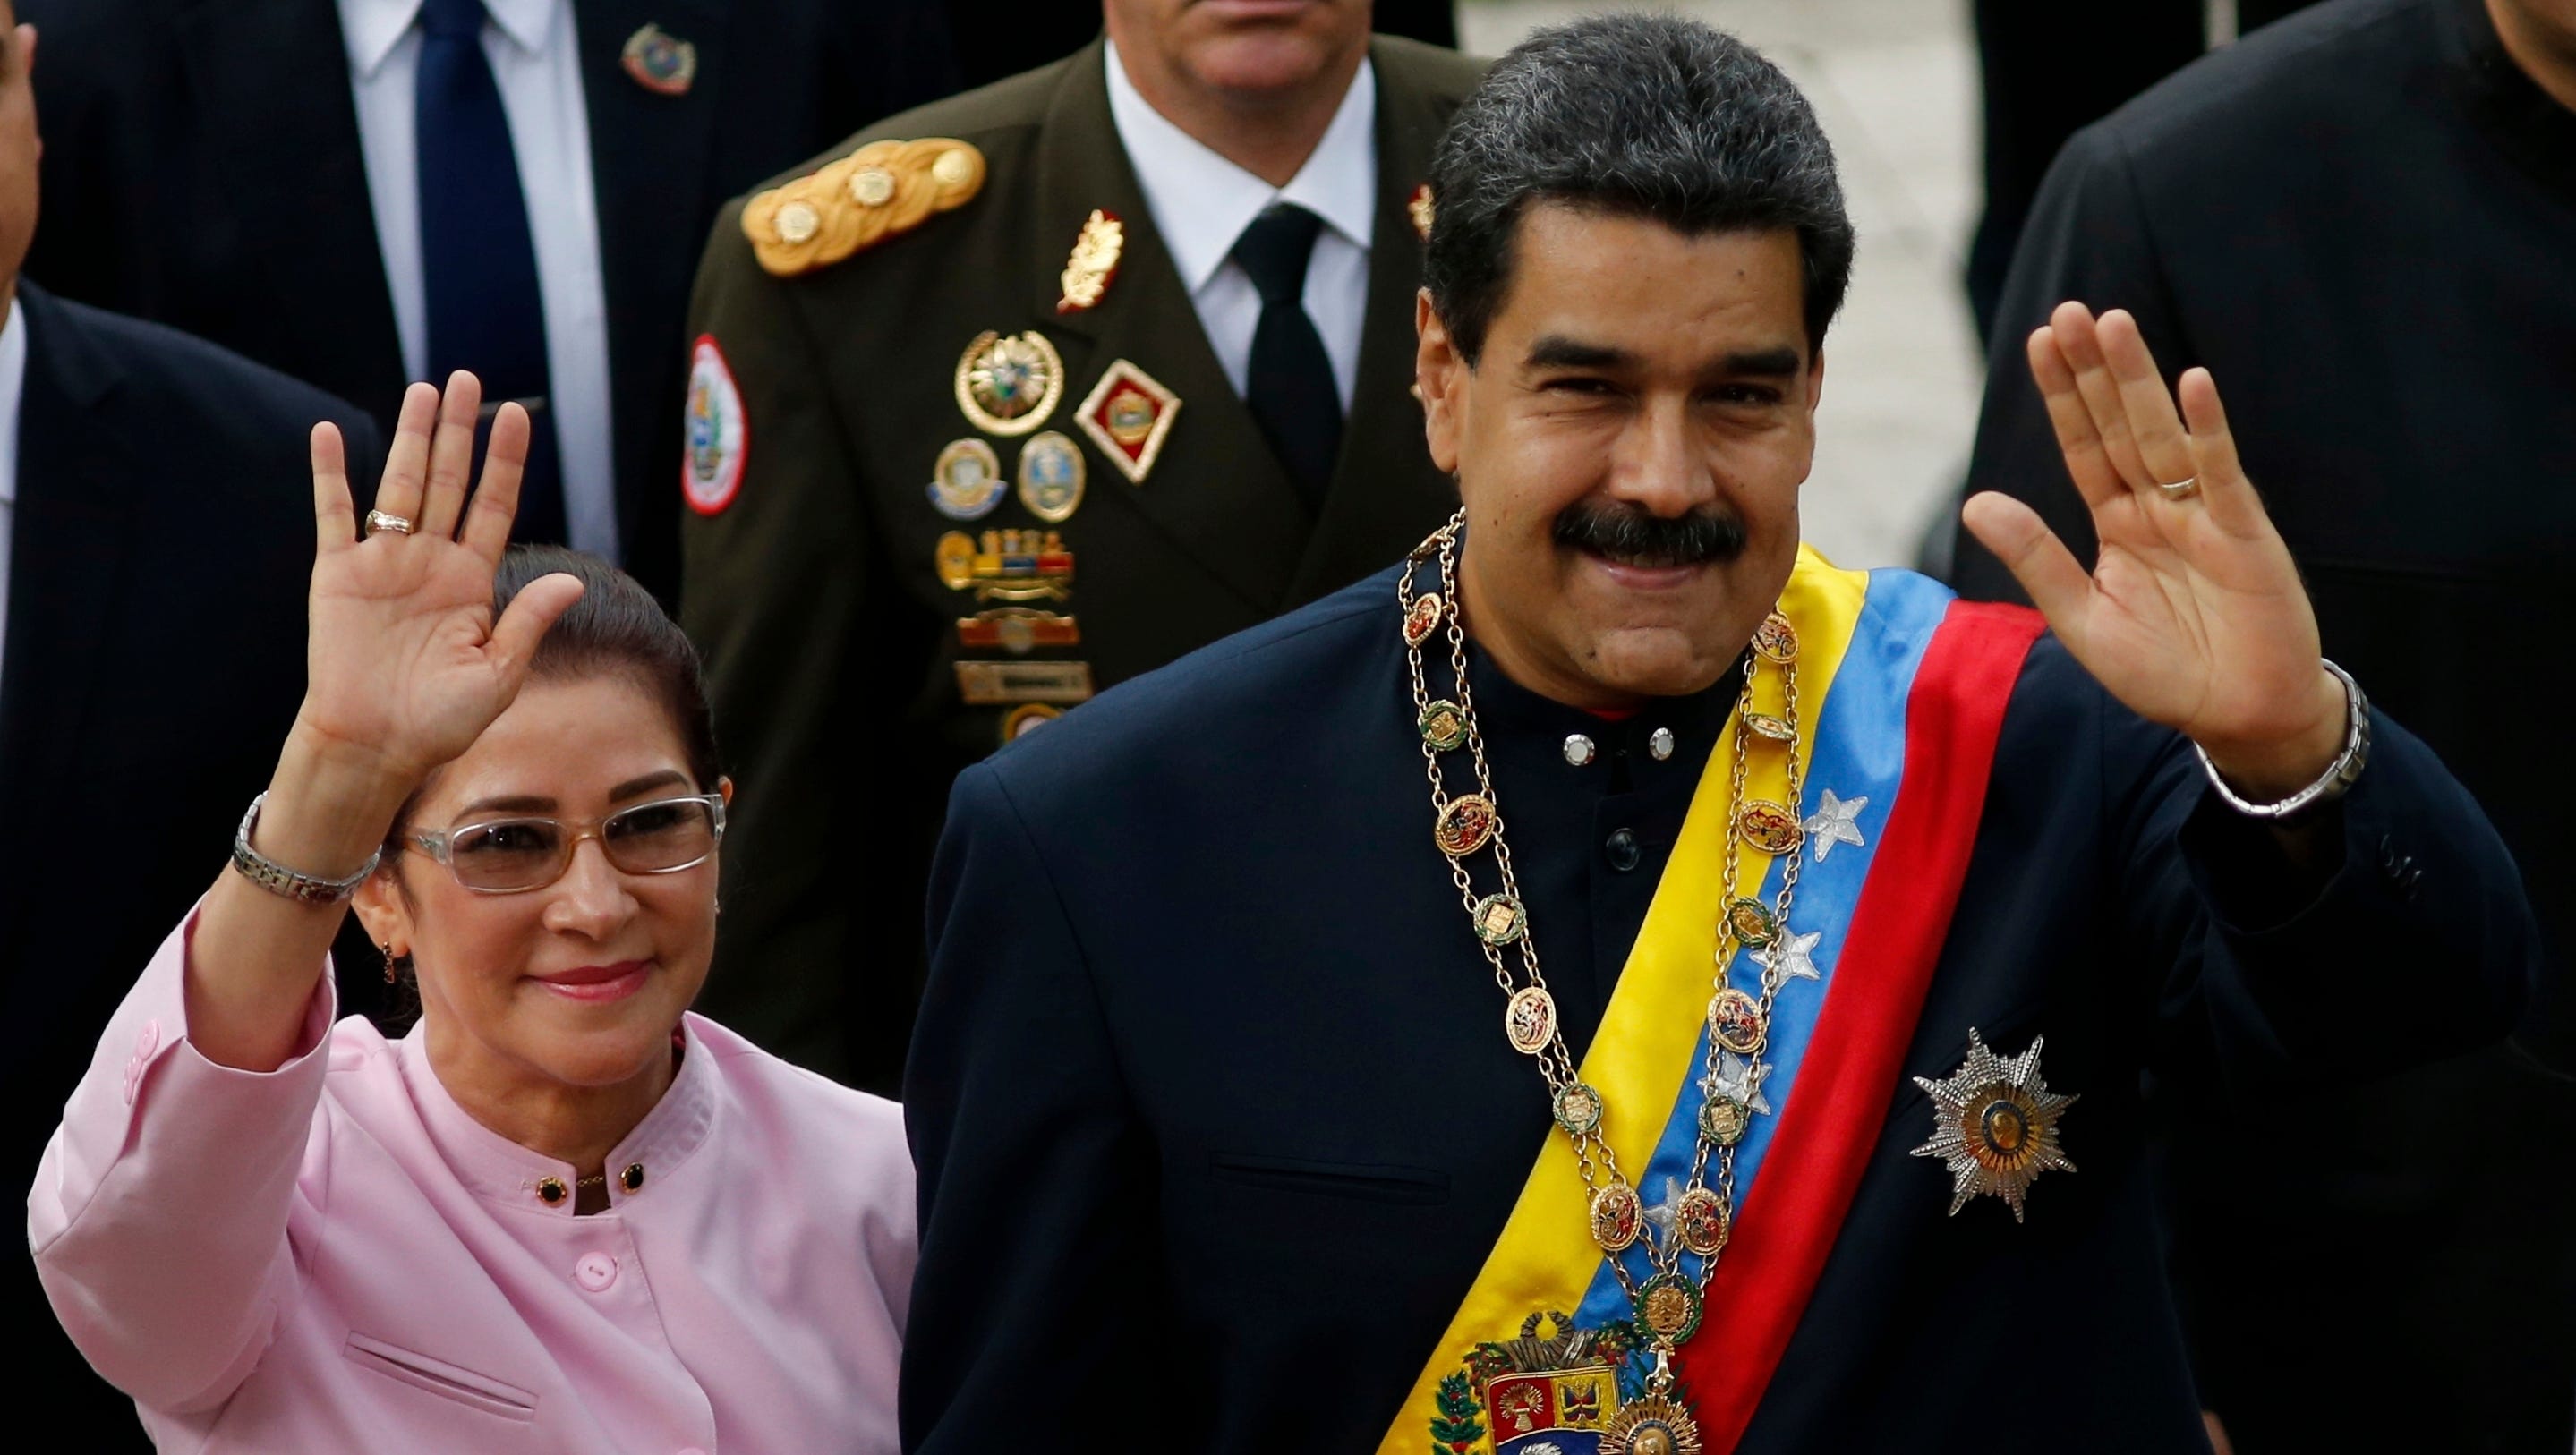 Nicolas Maduro: Why the Venezuelan president is so controversial